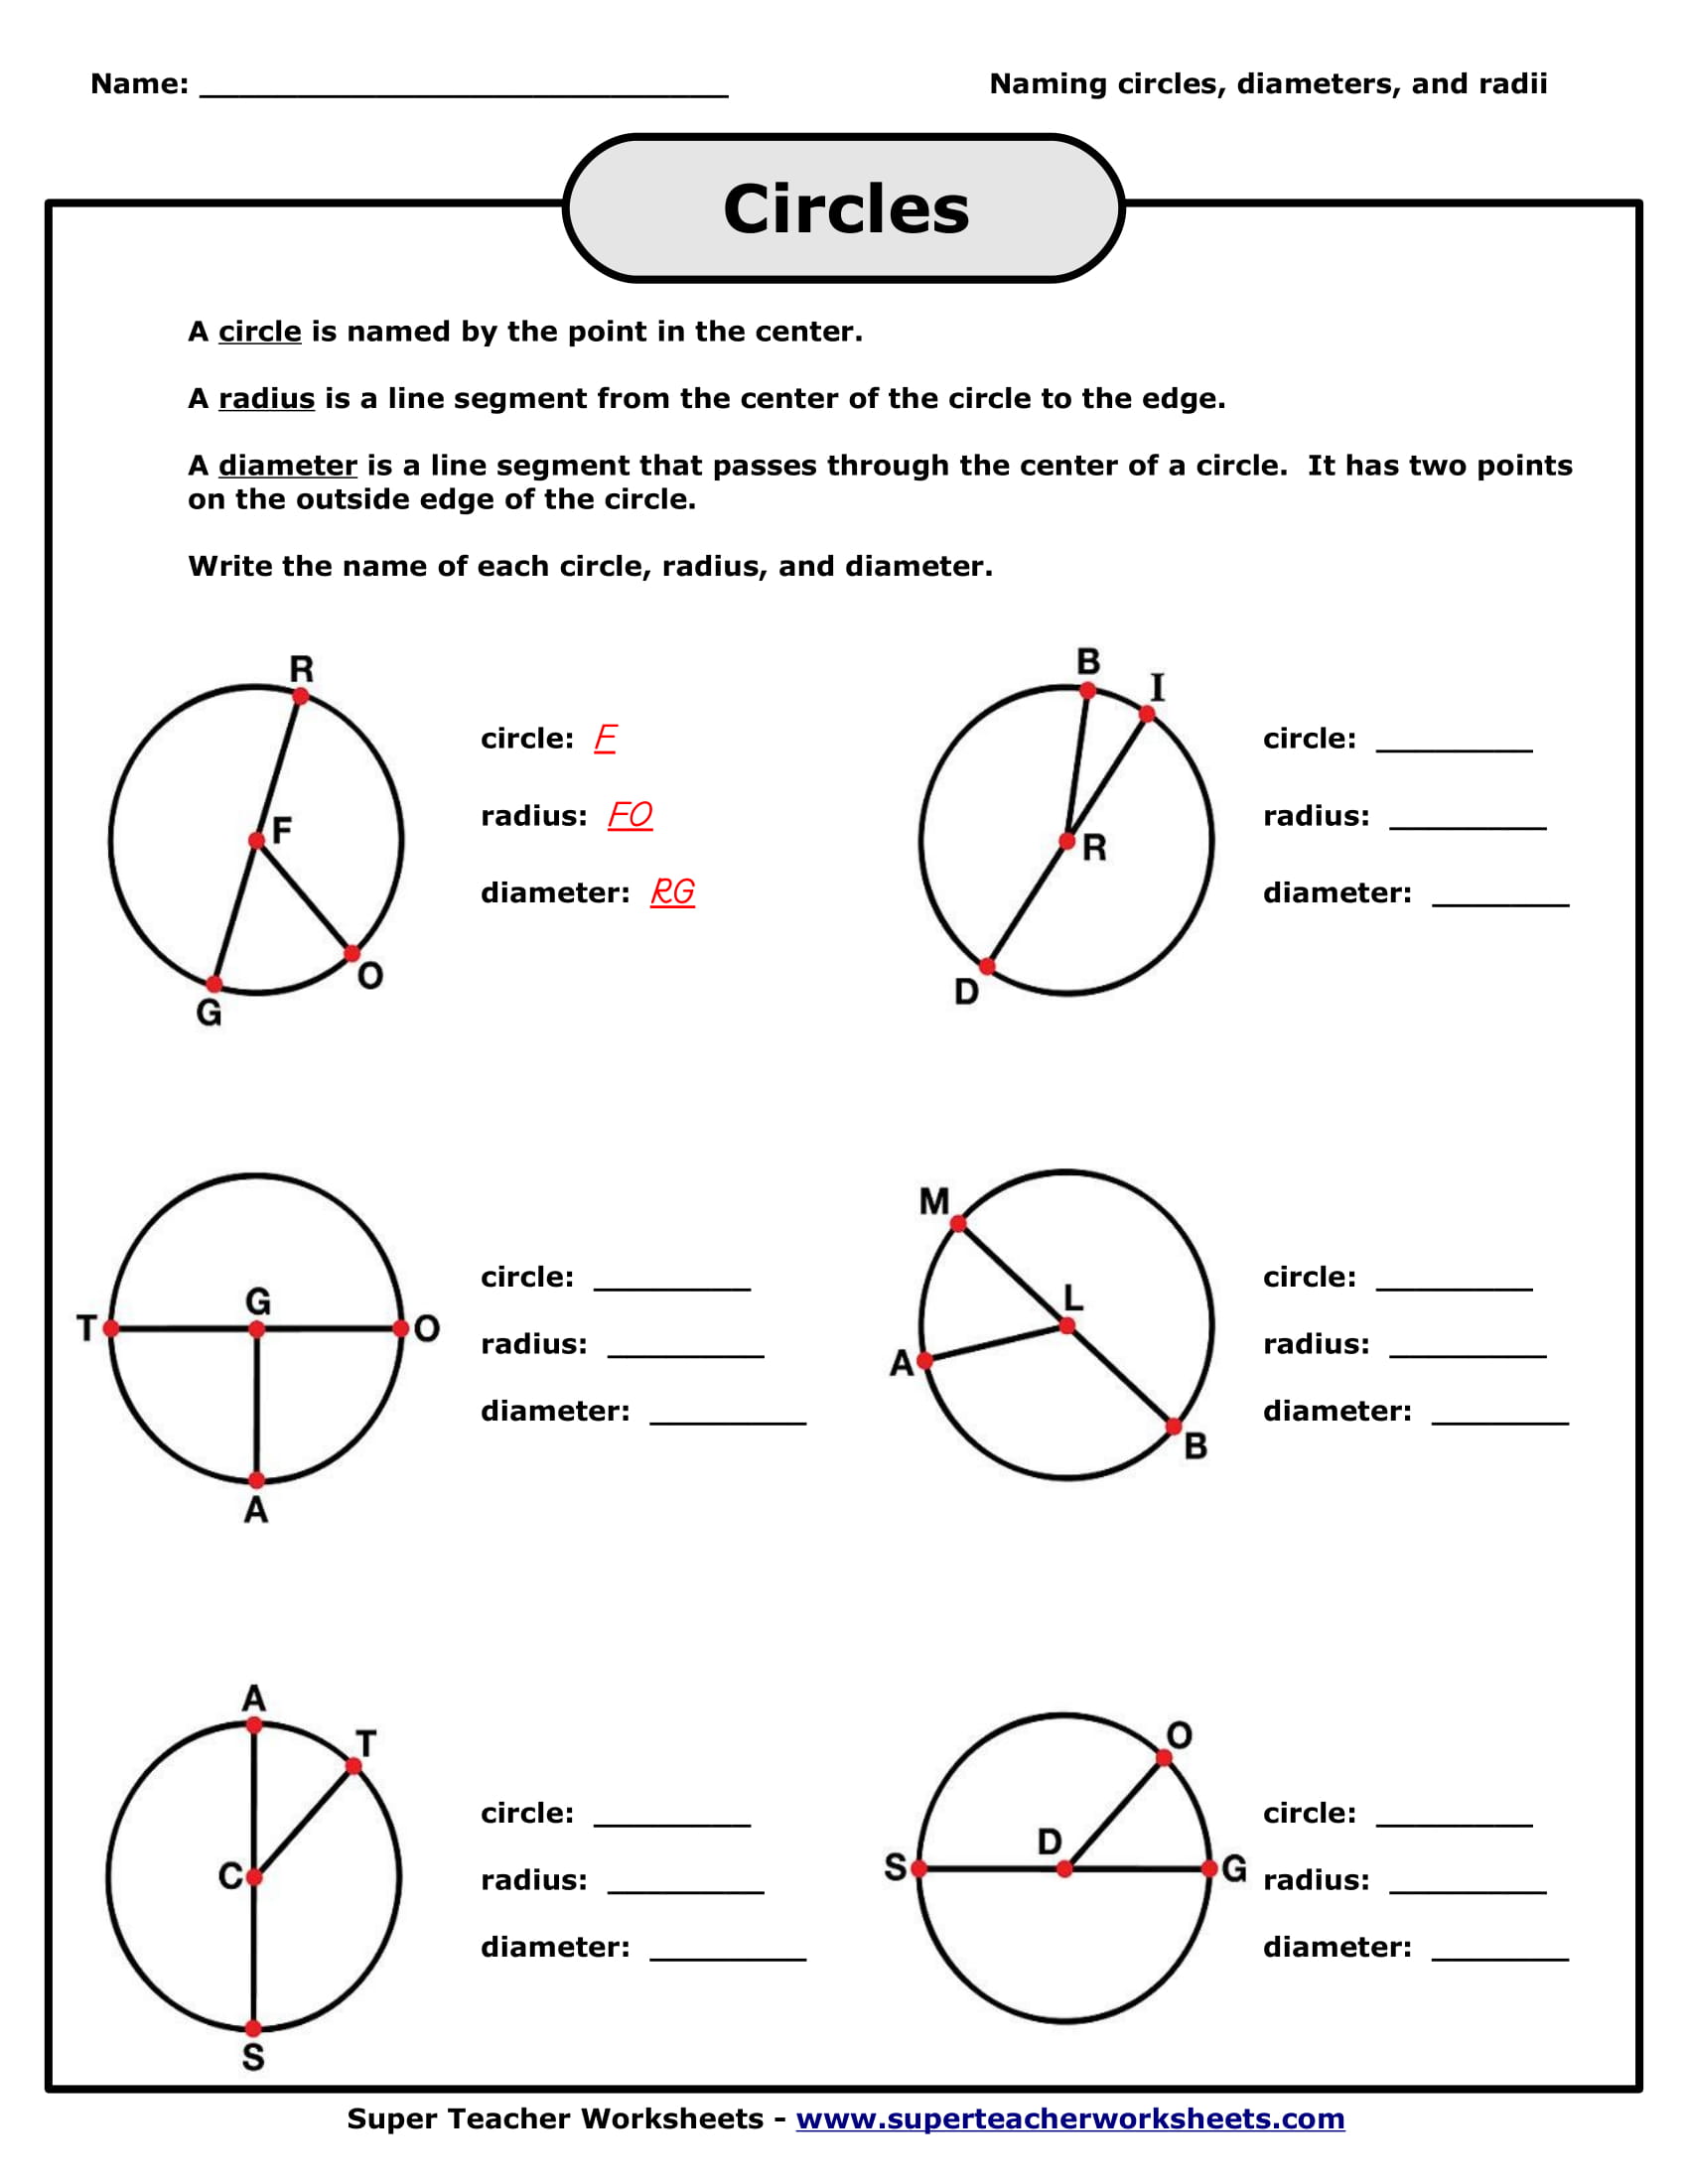 circles-worksheet-grade-10